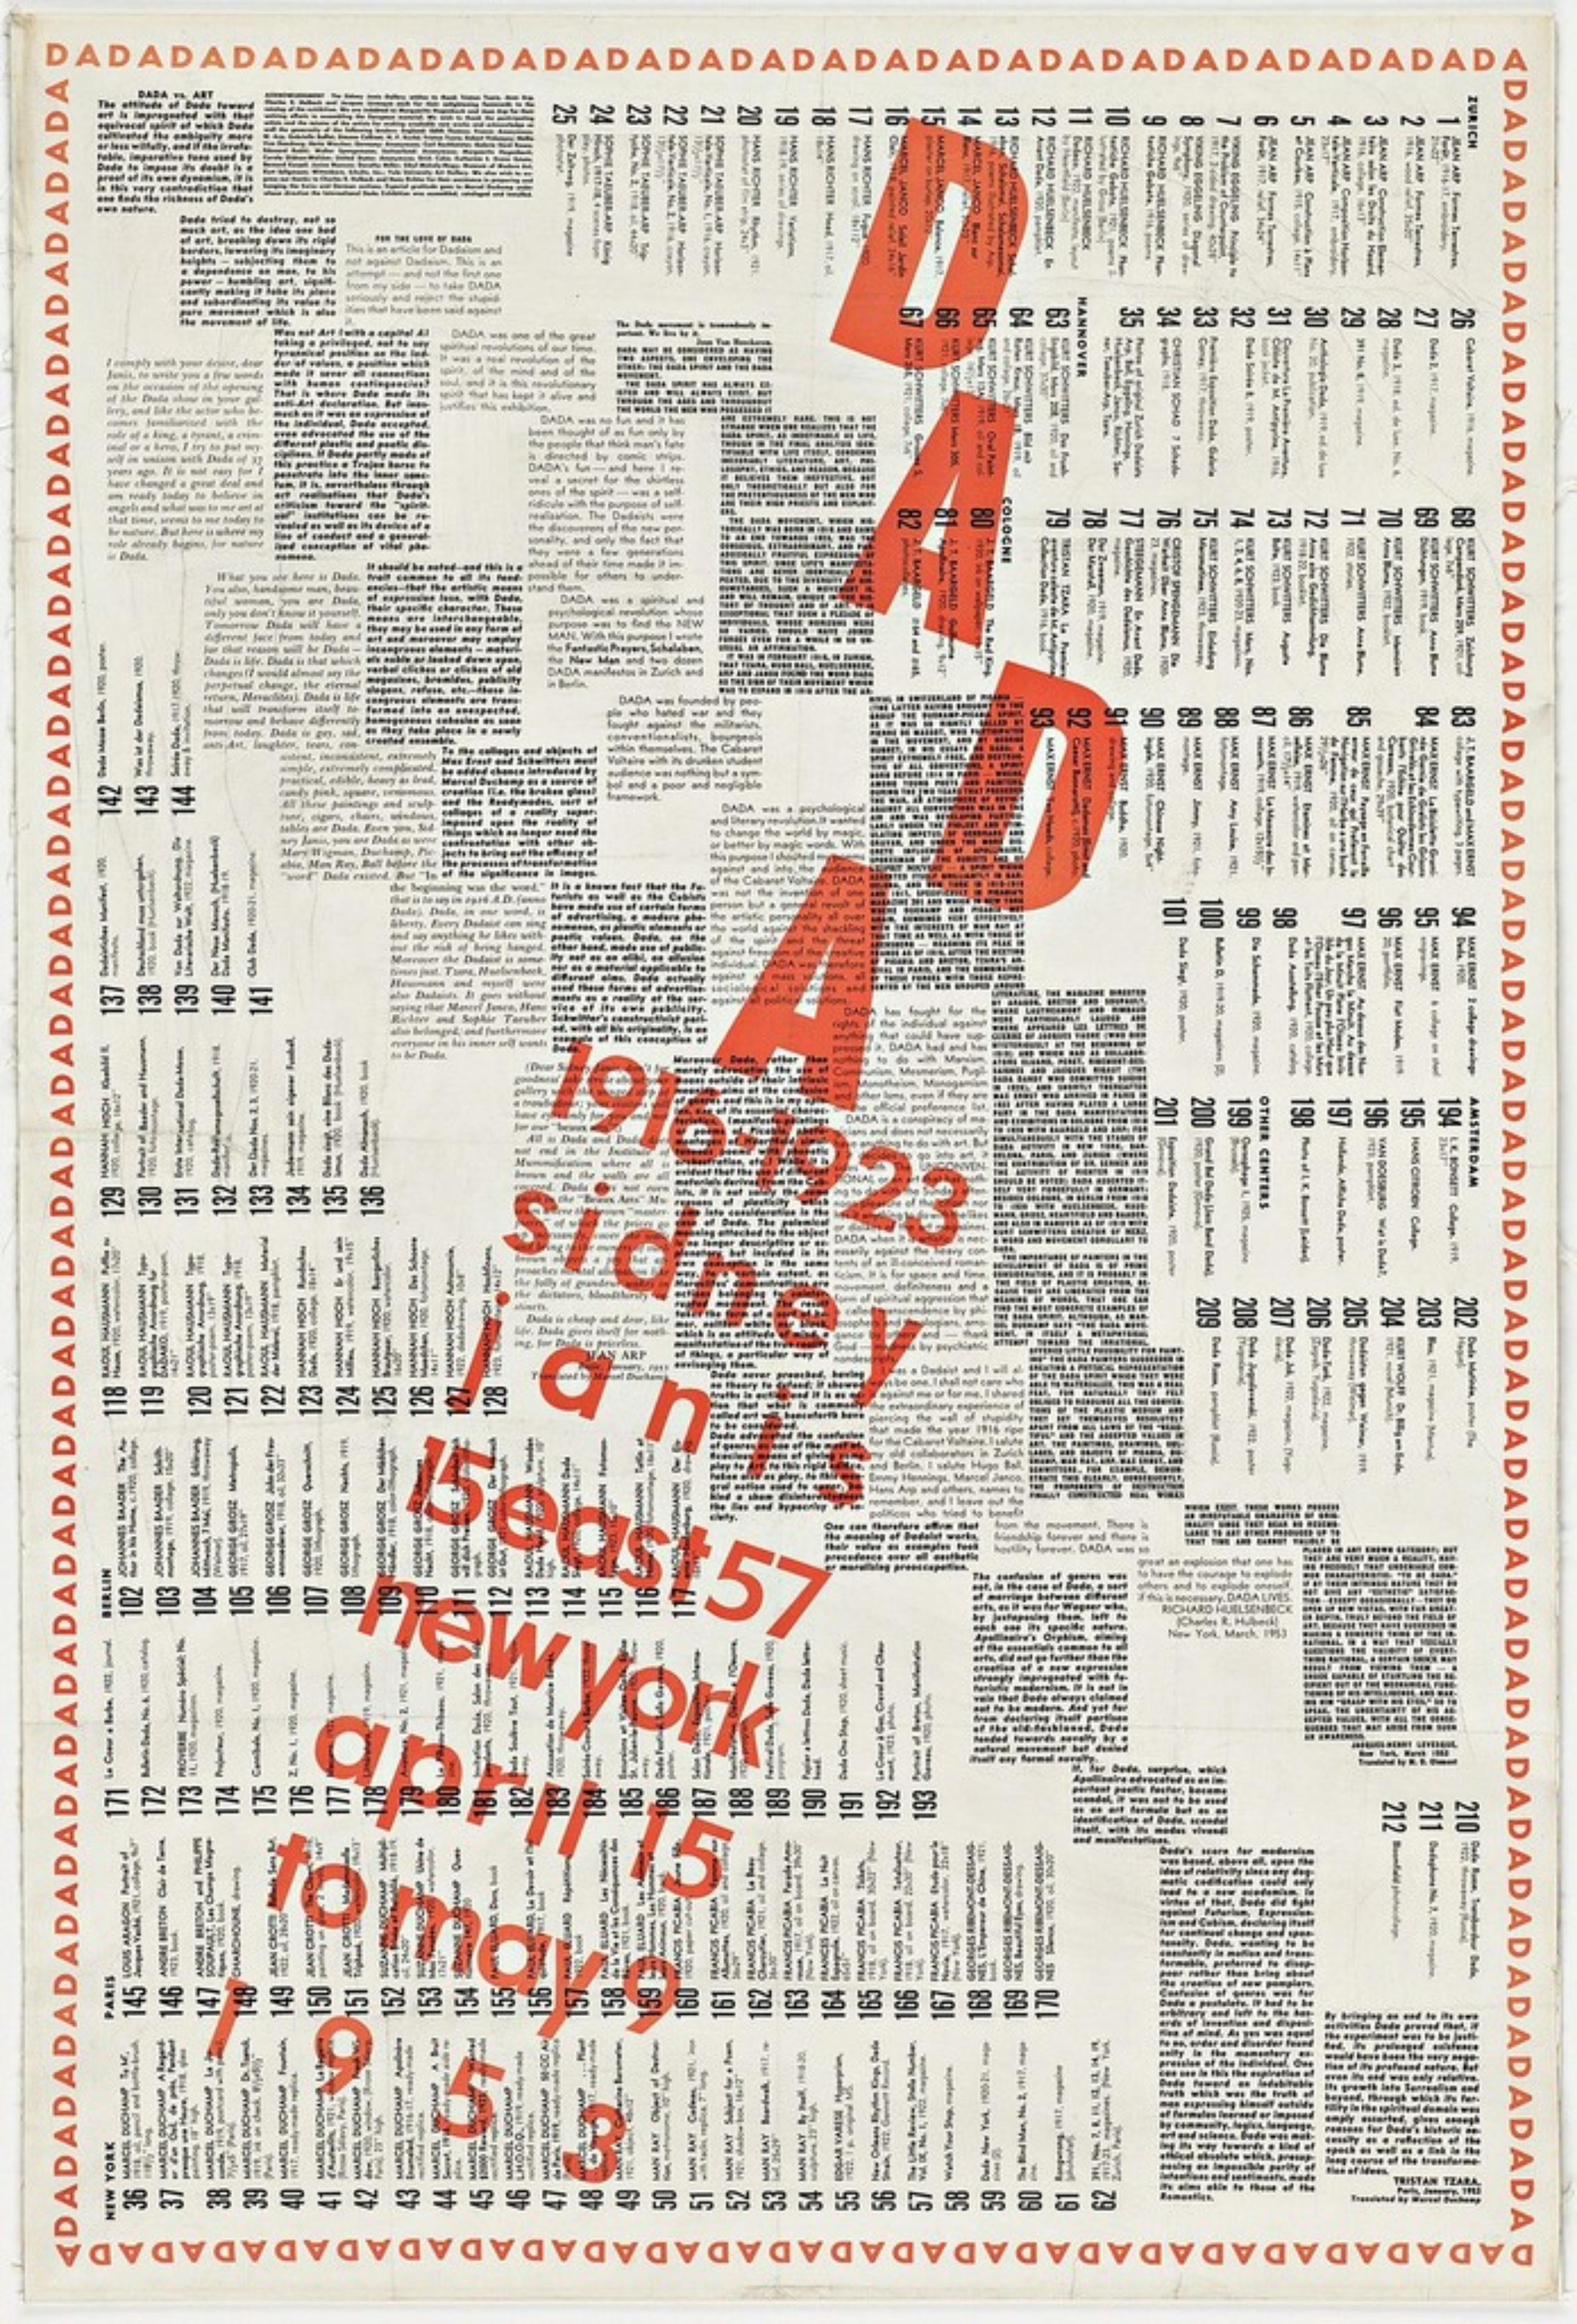 DADA historic Sidney Janis gallery mixed media, mid century designed by Duchamp